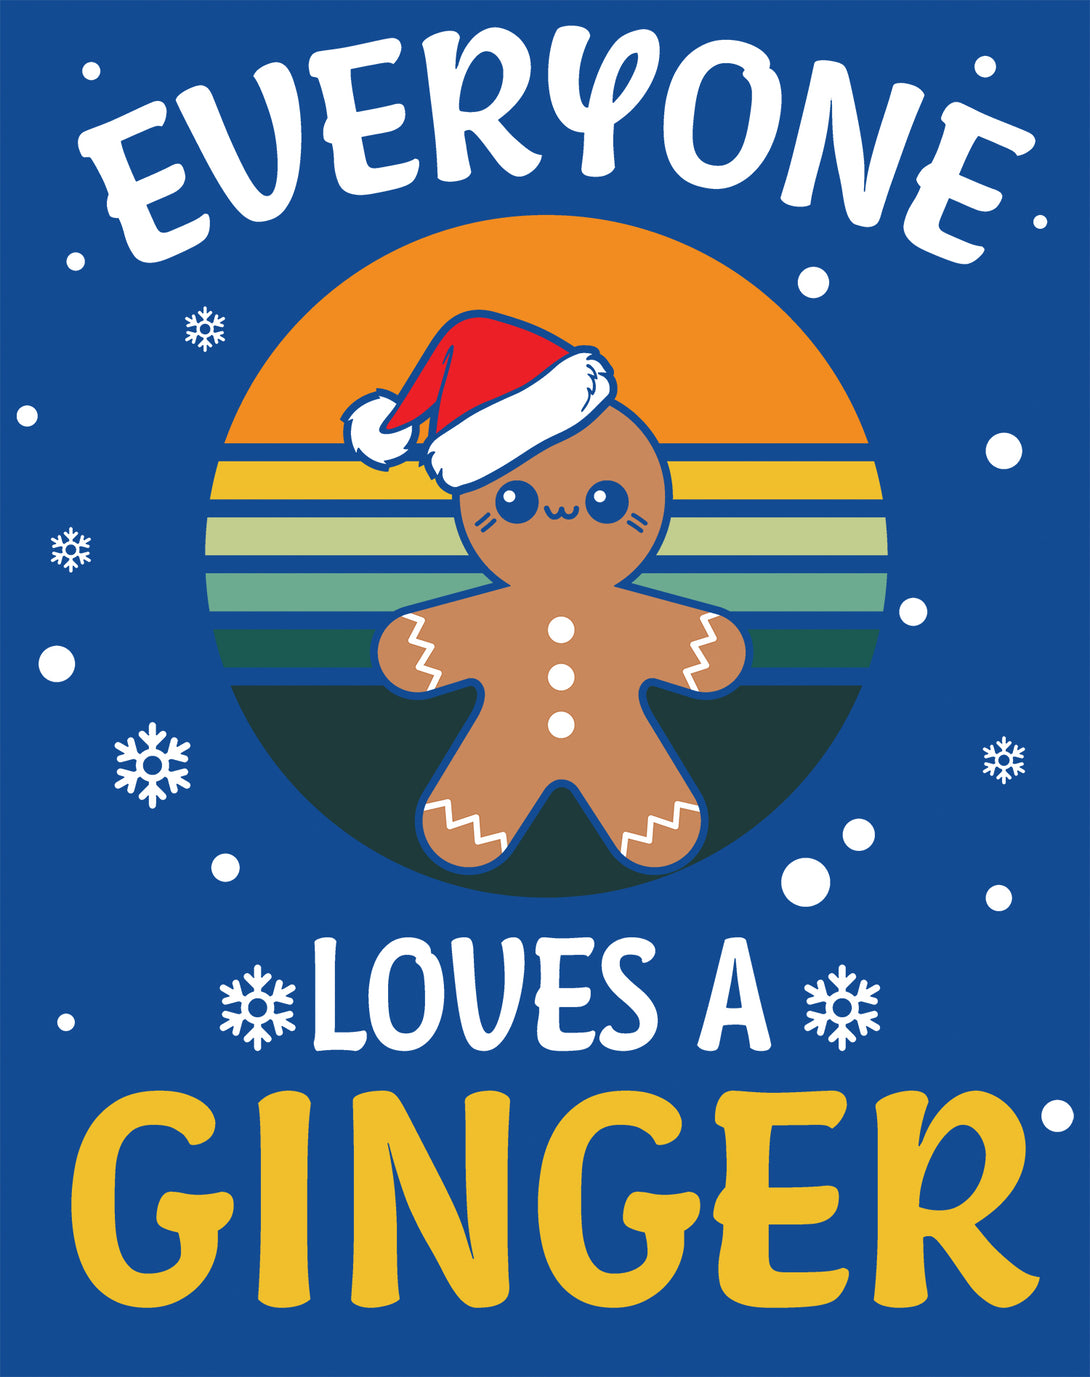 Christmas Ginger Everyone Loves Meme Fun Gingerbread Man Lol Kid's T-Shirt Blue - Urban Species Design Close Up